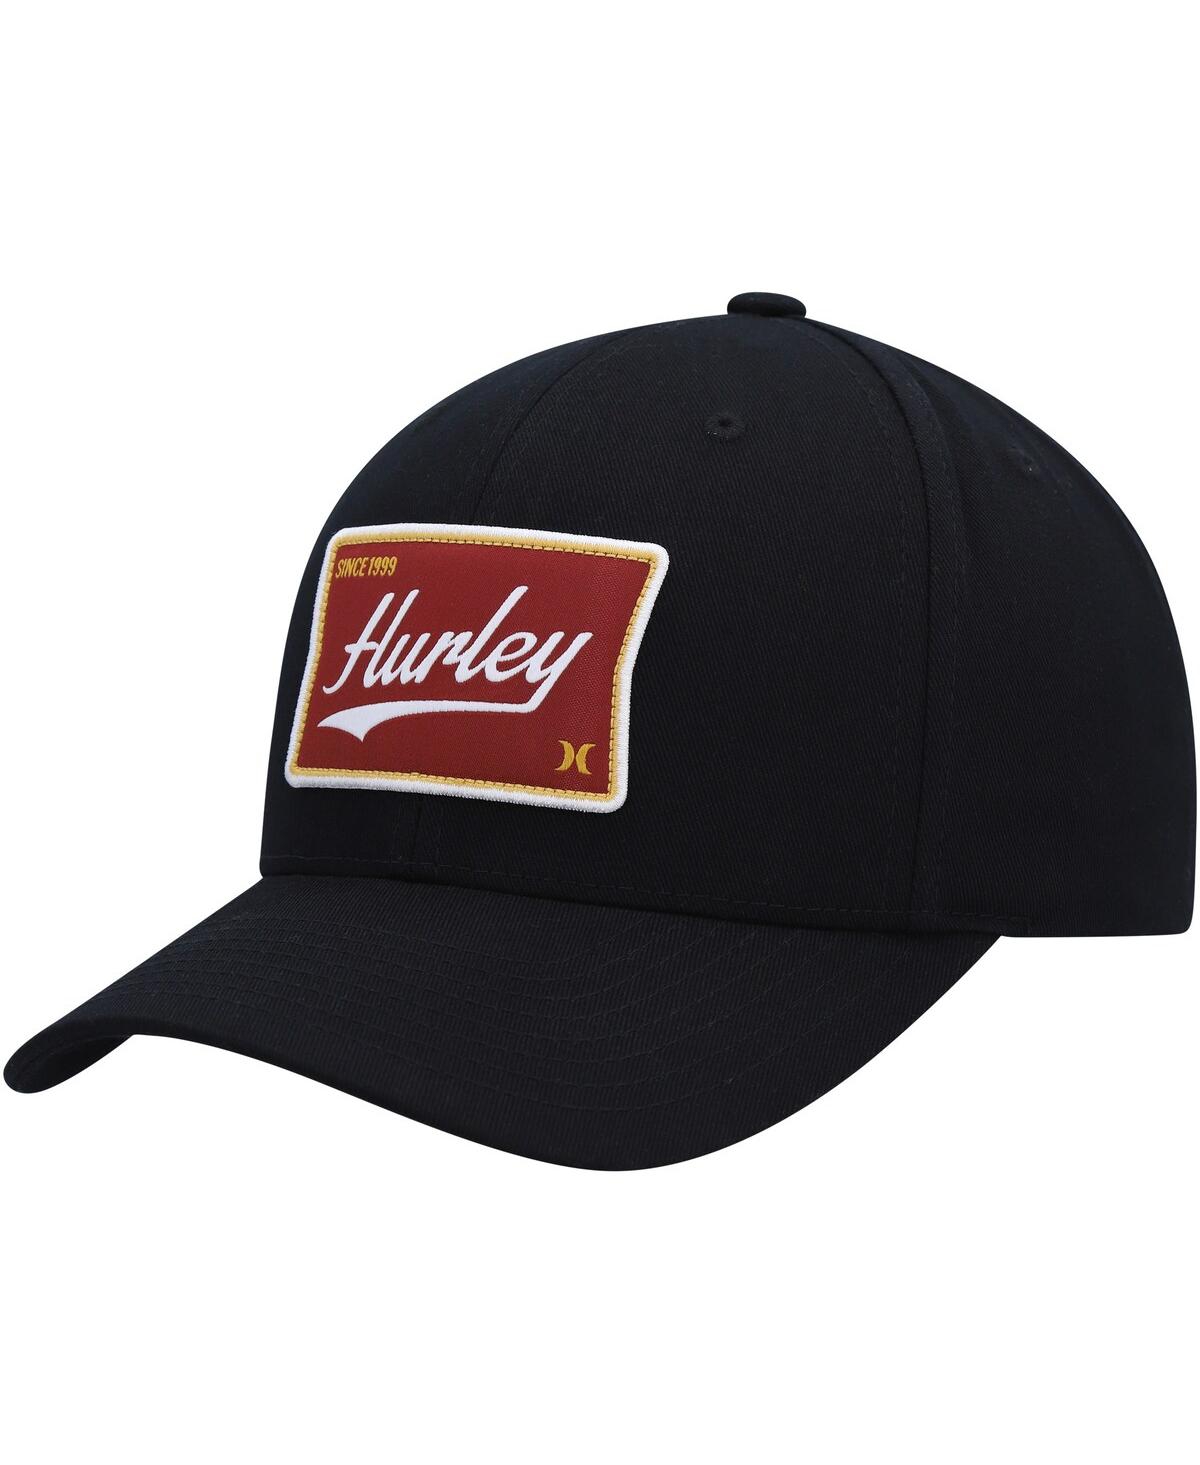 Men's Hurley Black Casper Snapback Hat - Black